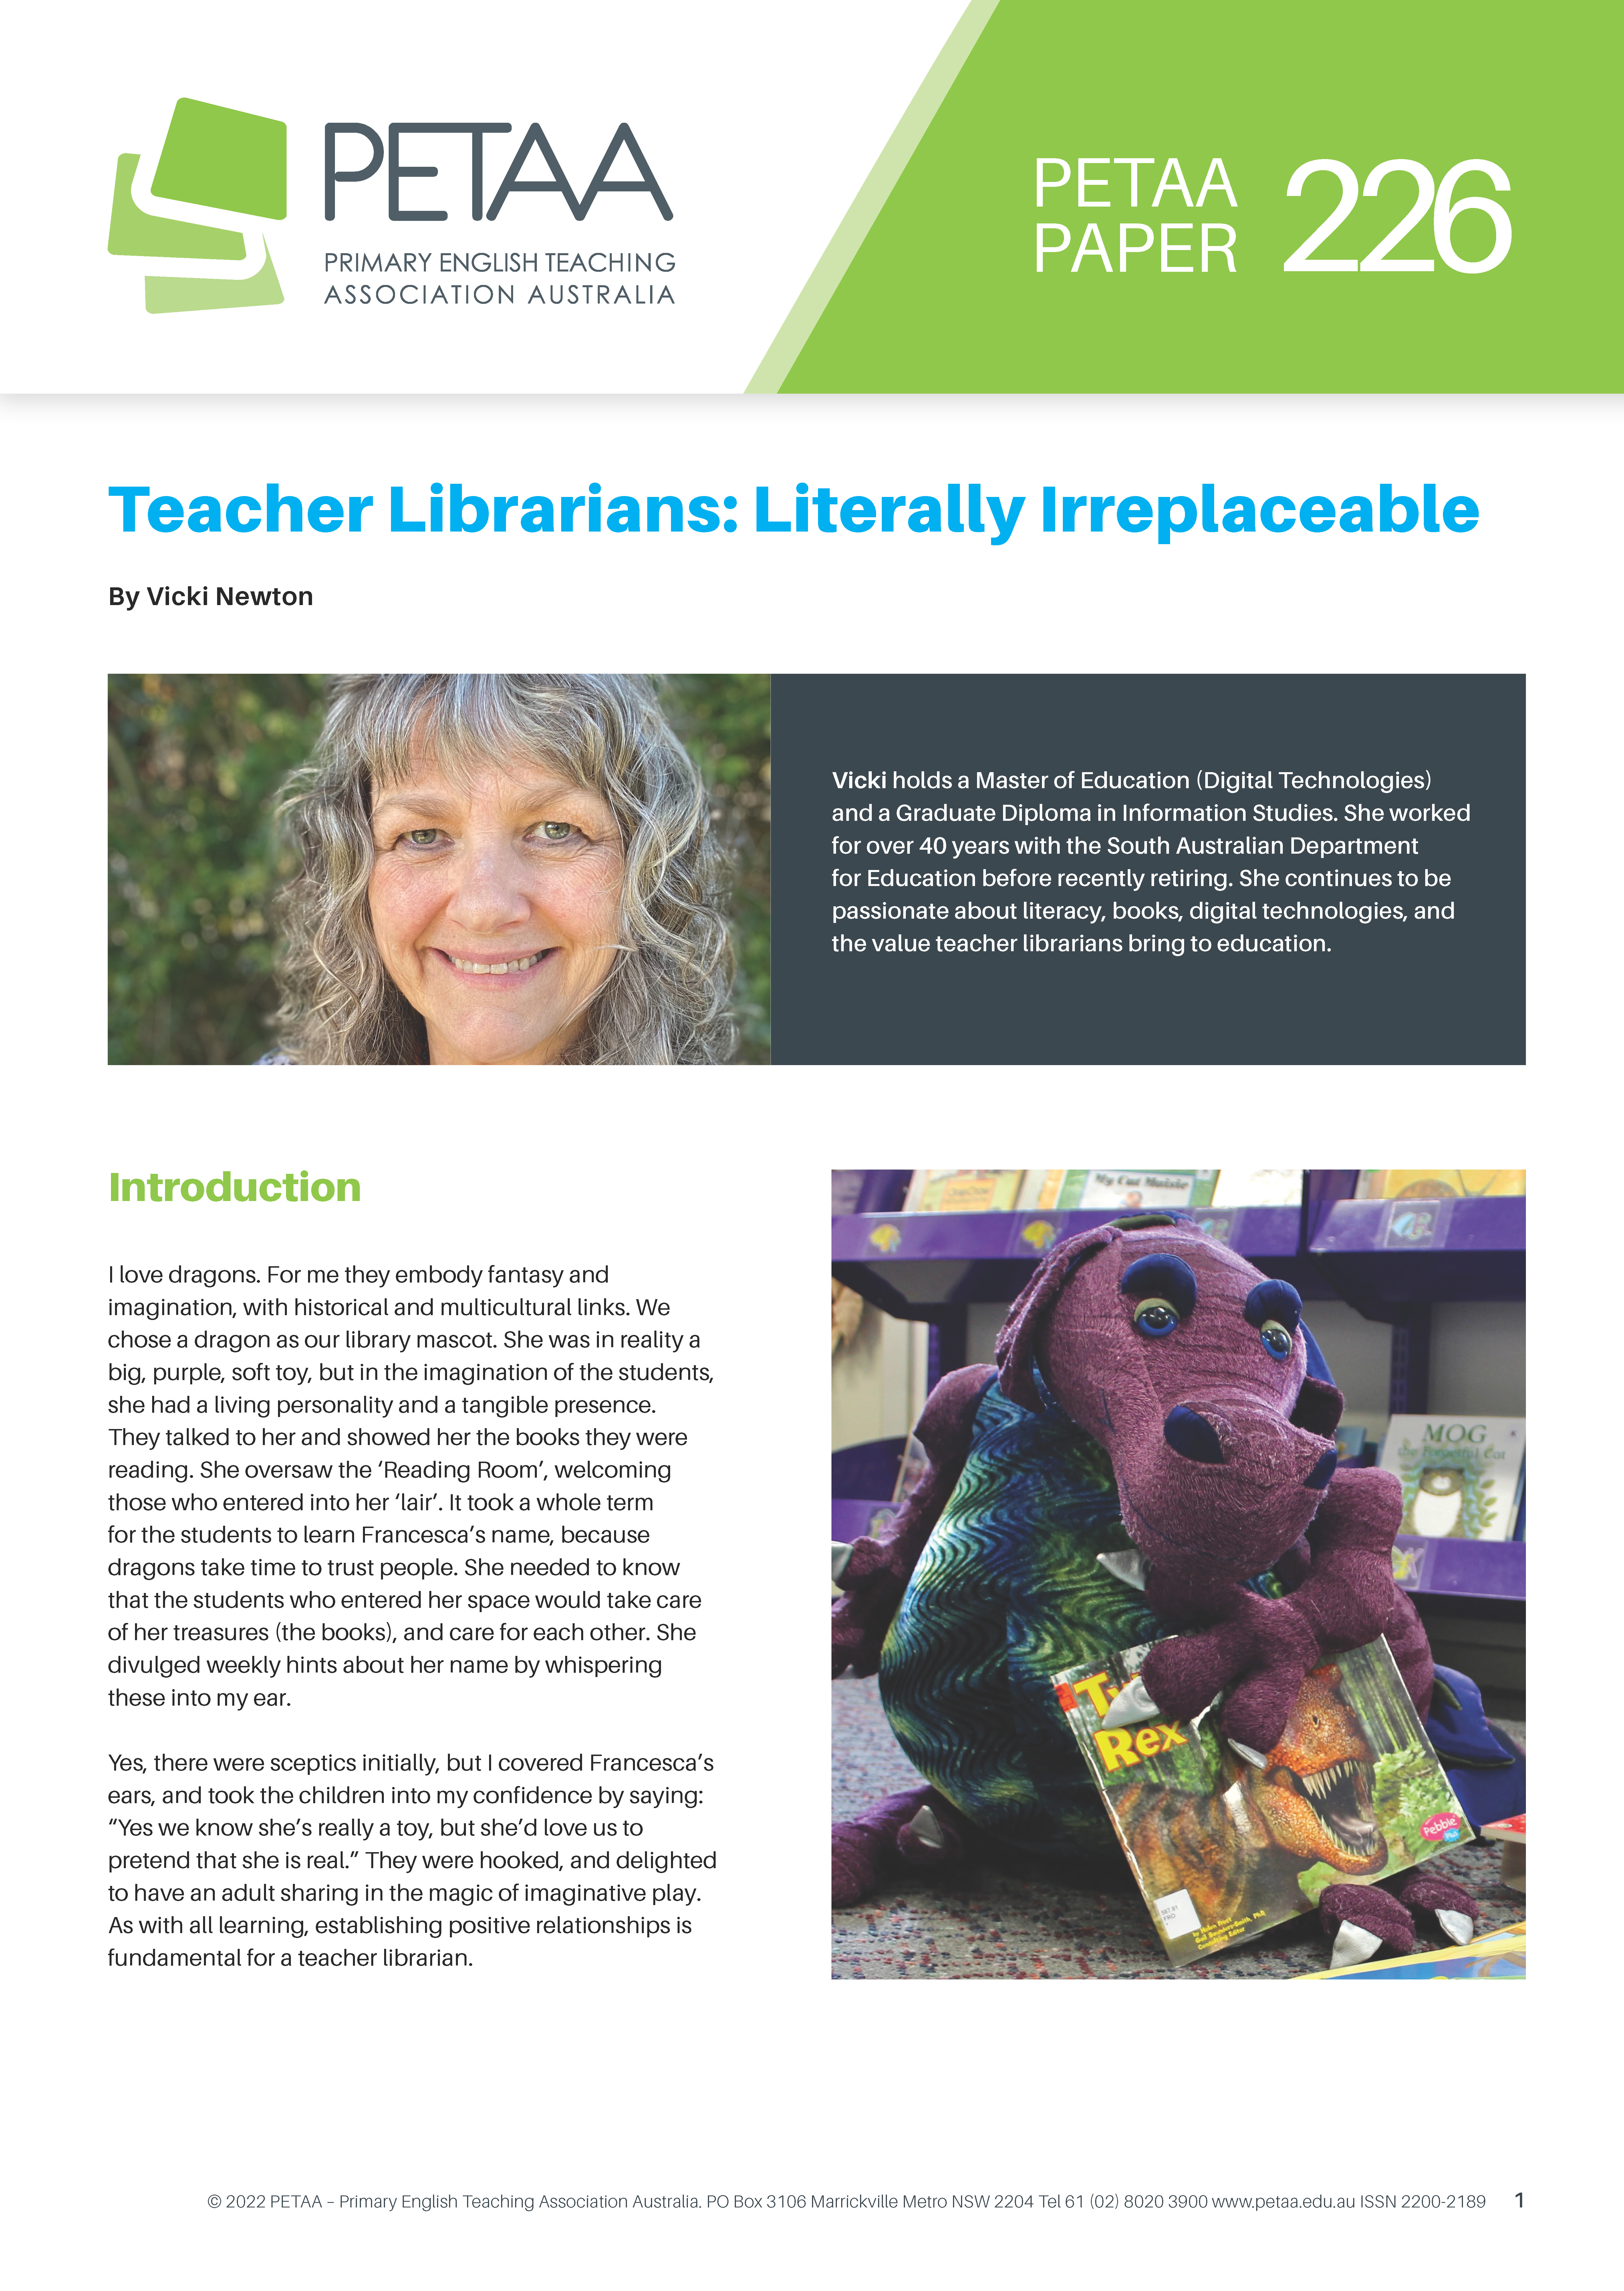 PP226: Teacher Librarians: Literally Irreplaceable